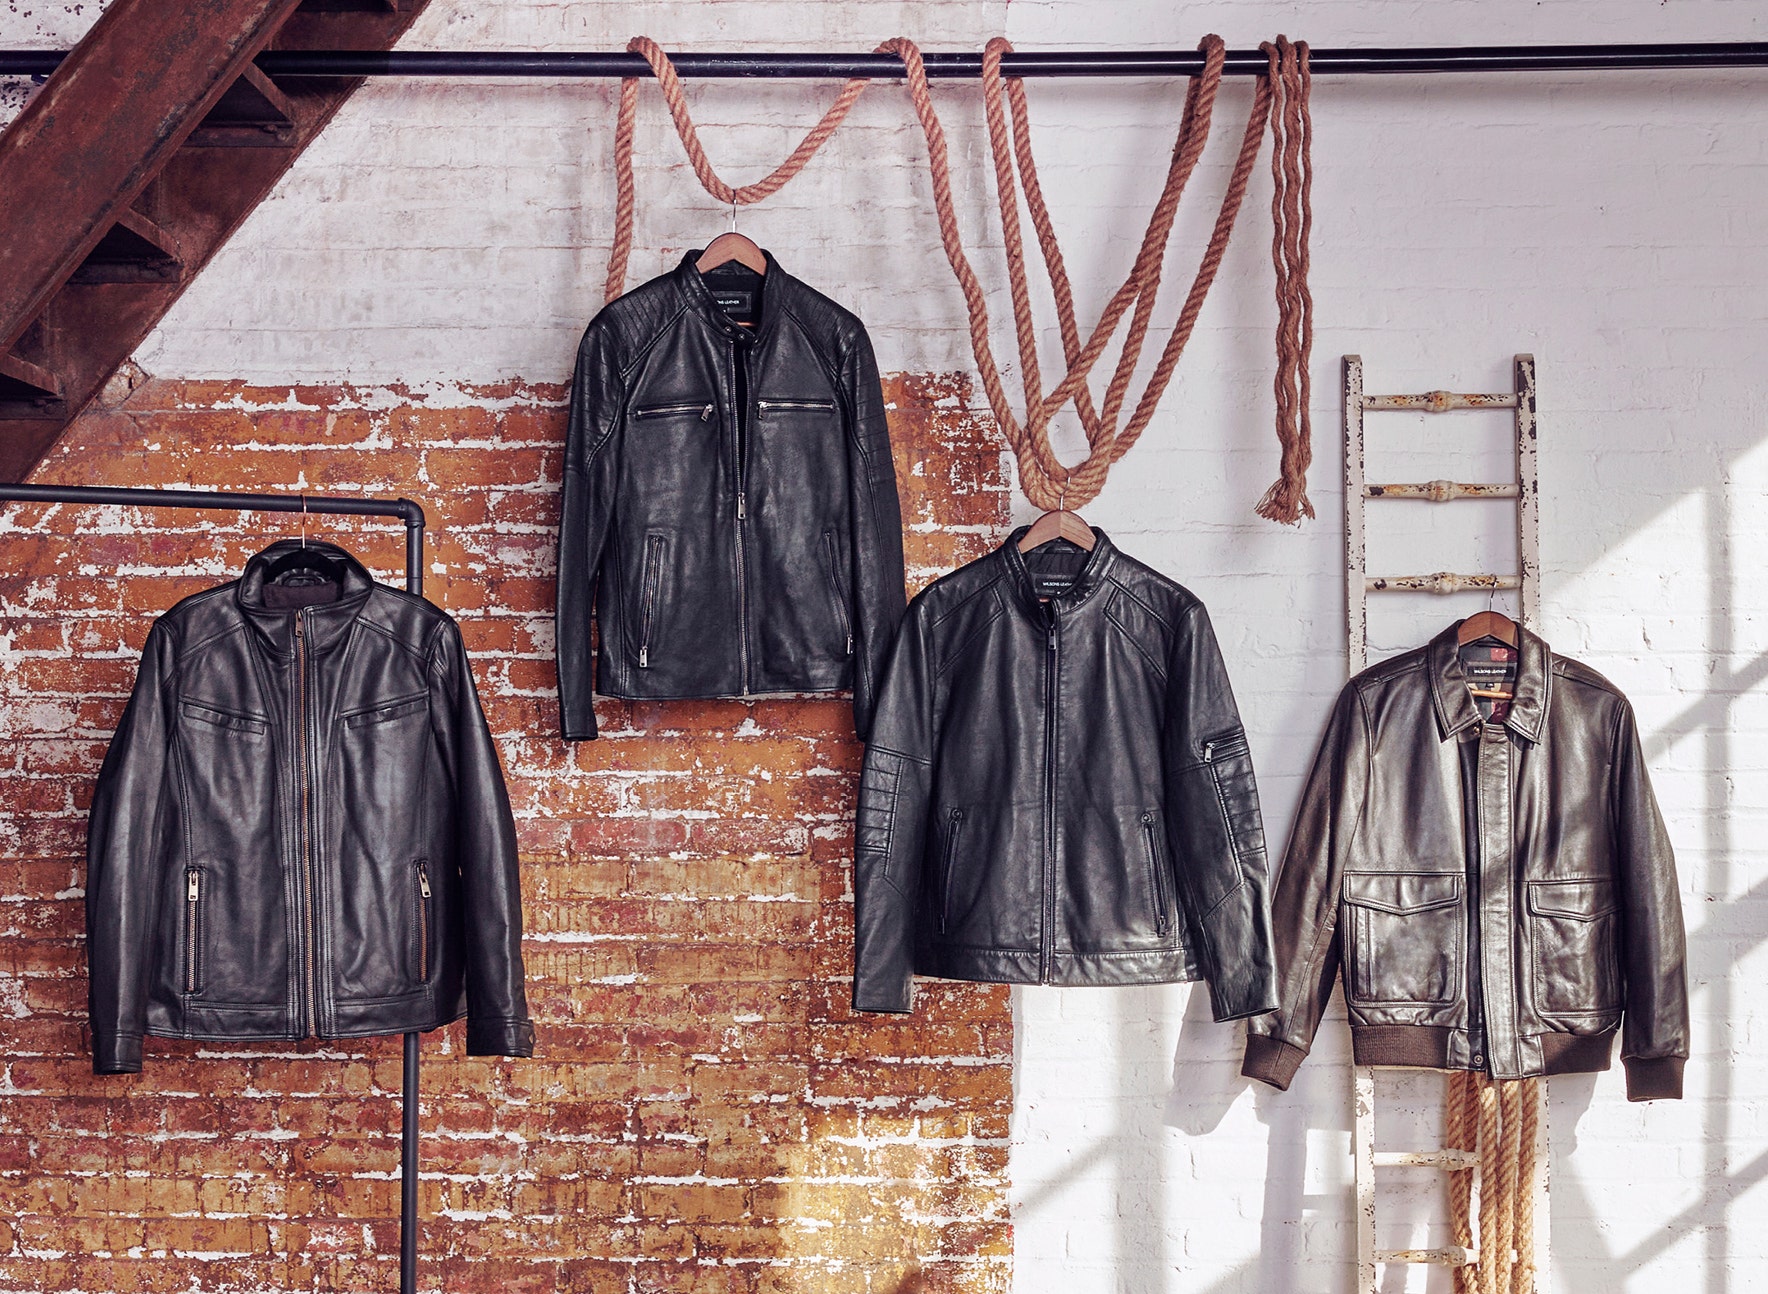 Wilsons Leather: Men's & Women's Leather Jackets, Handbags & More